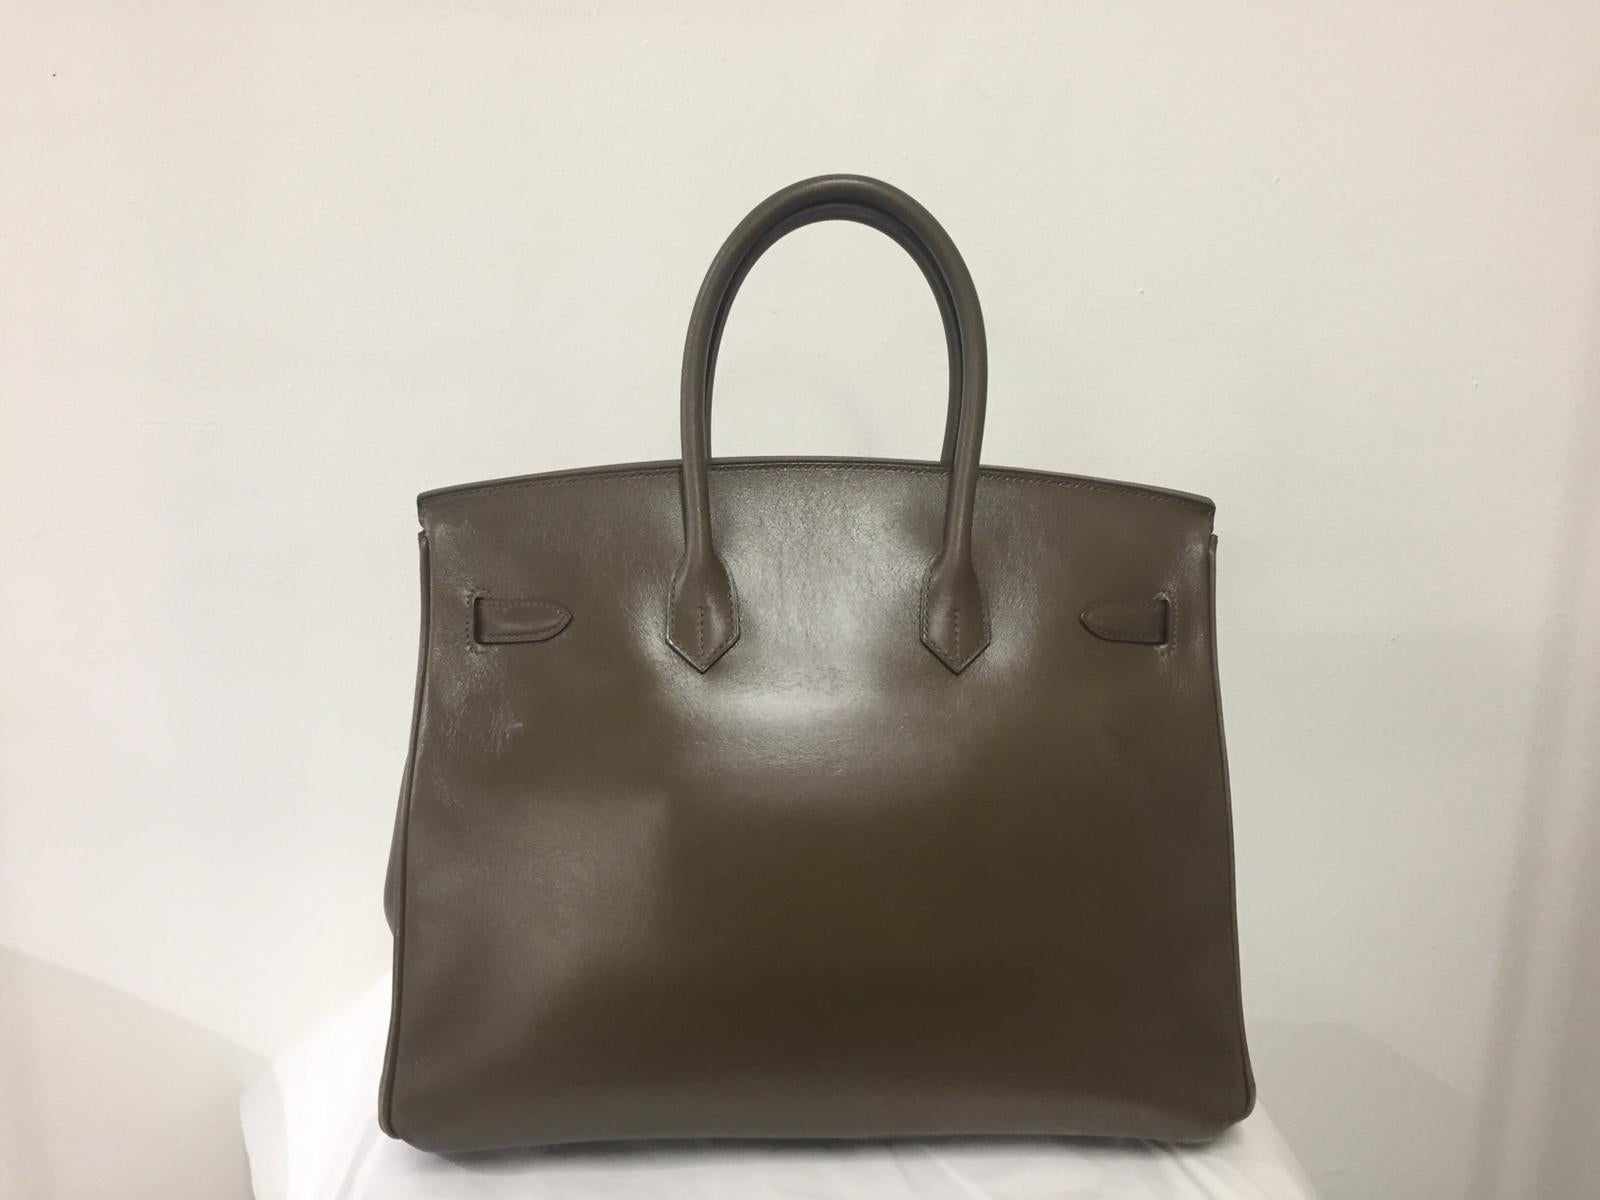 Hermès Olive double color 35 cm Birkin Bag 
Elegant with palladium hardware.
The bag has slight stripes on the front.
